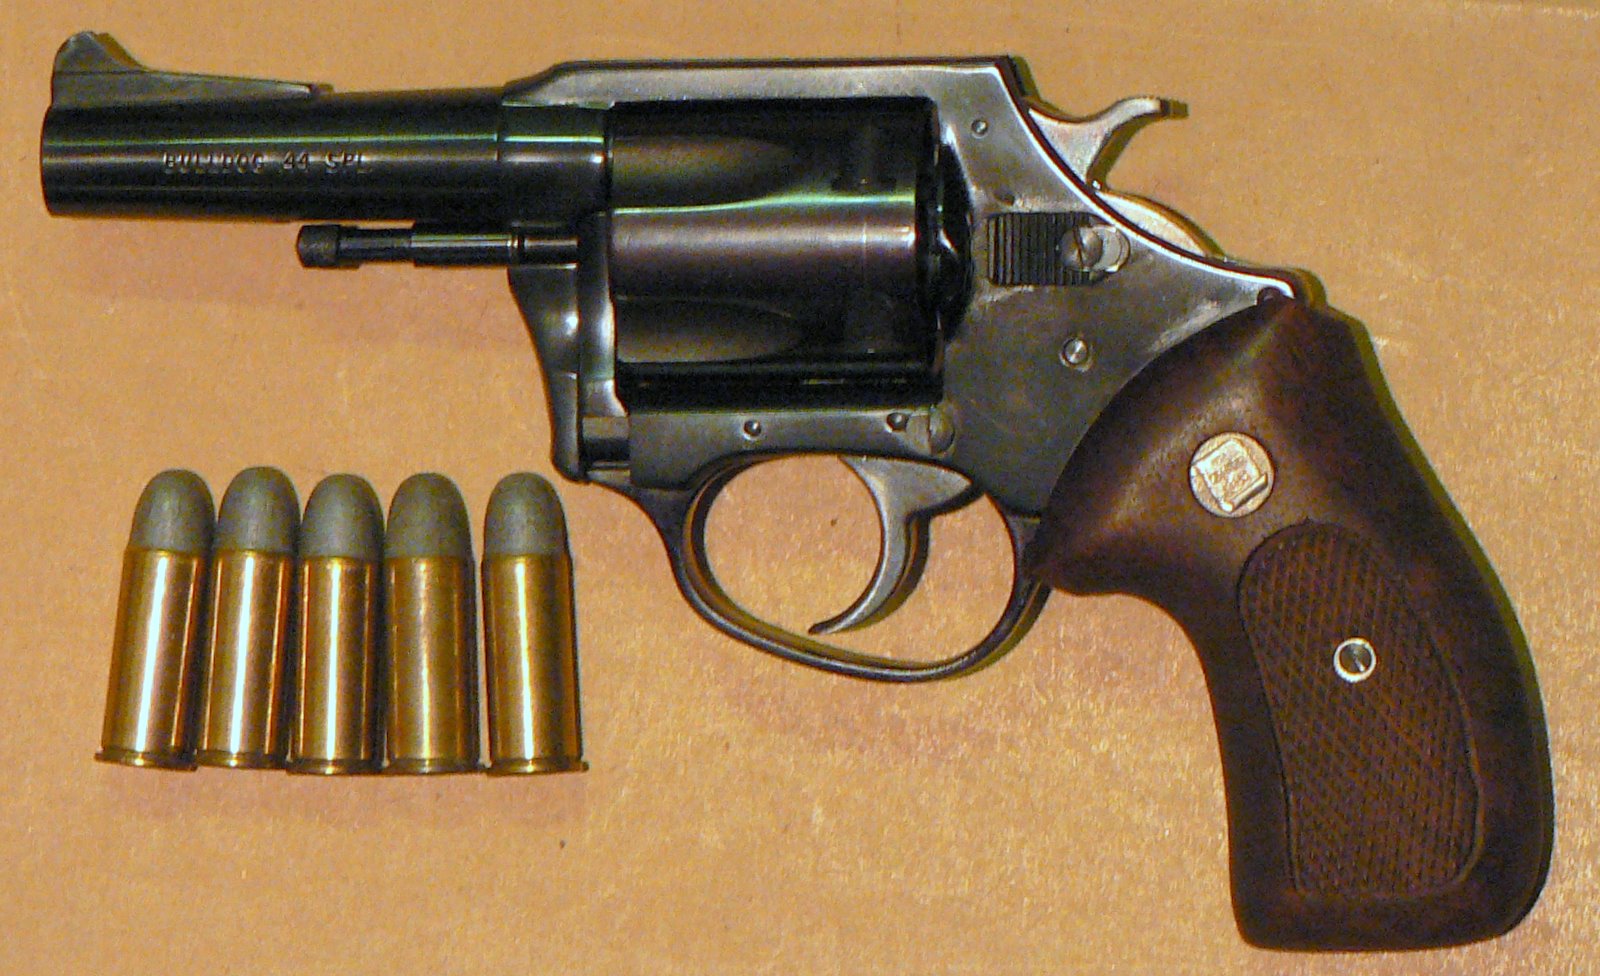 beginner-friendly 9mm revolvers